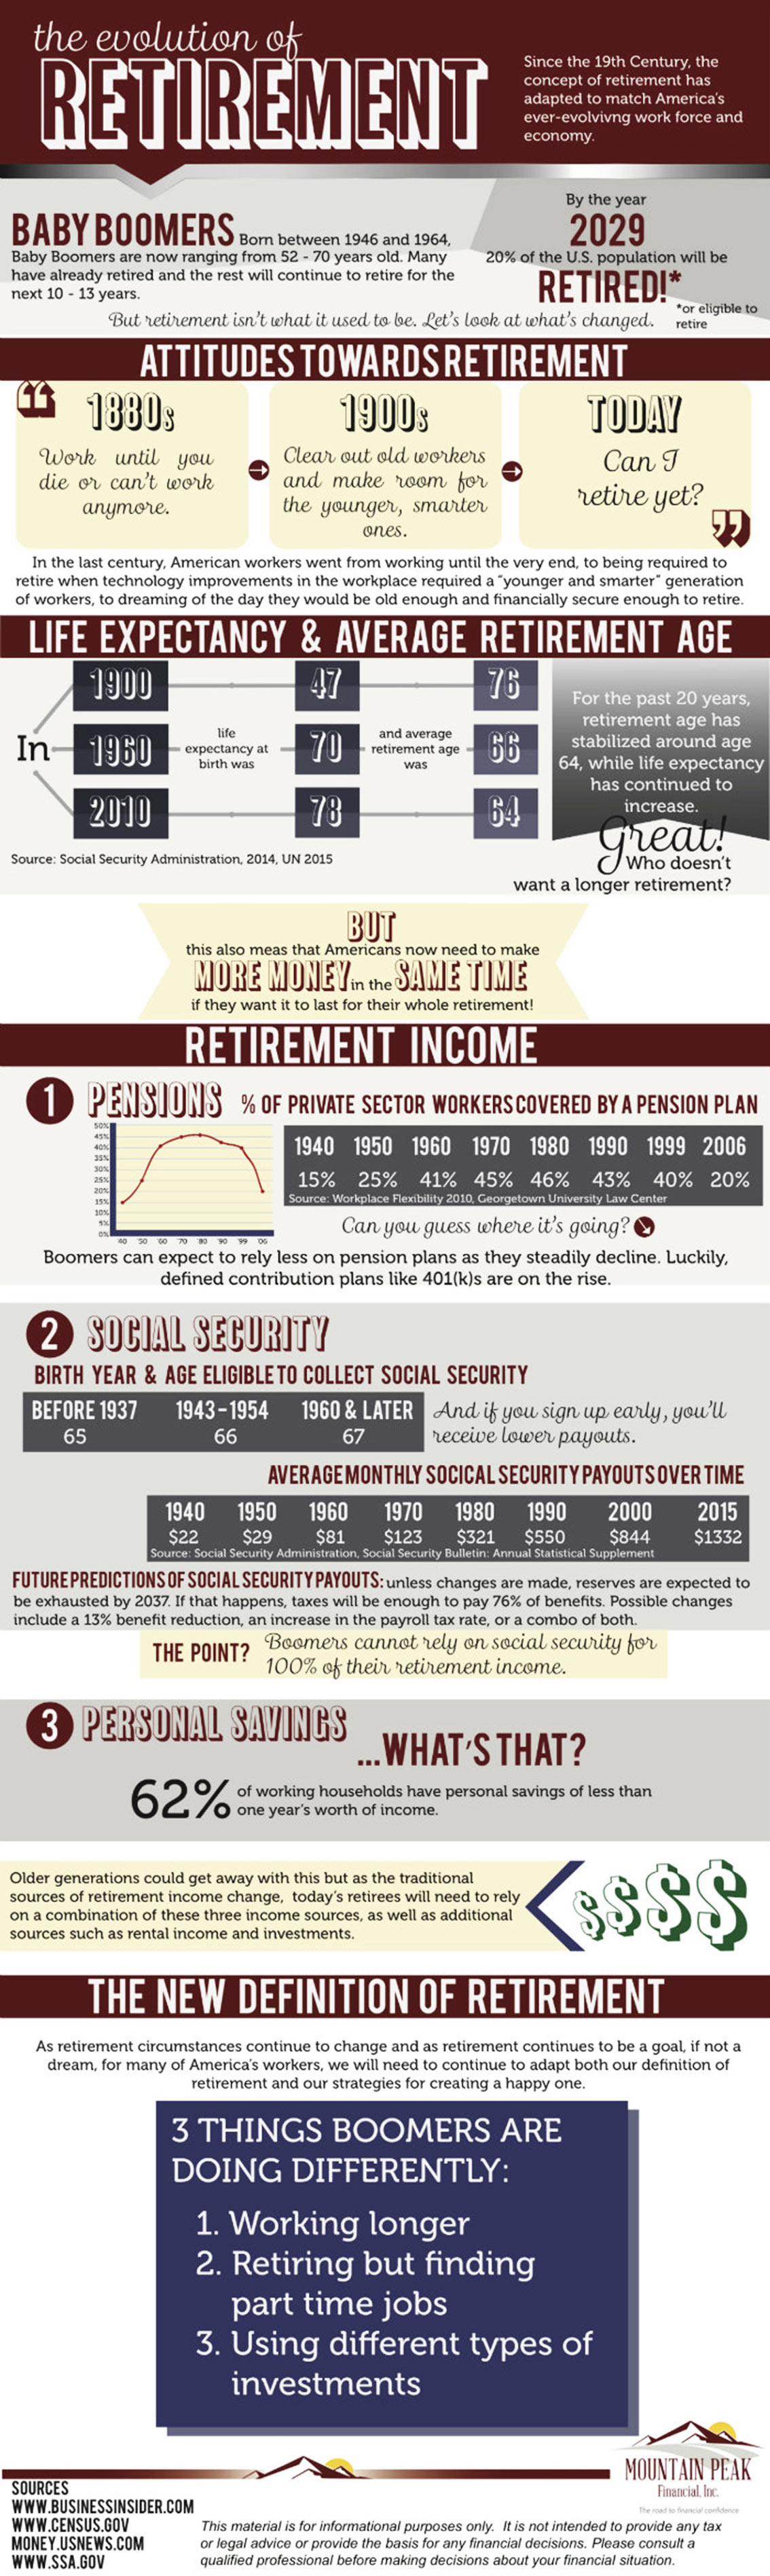 Evolution of Retirement Infographic